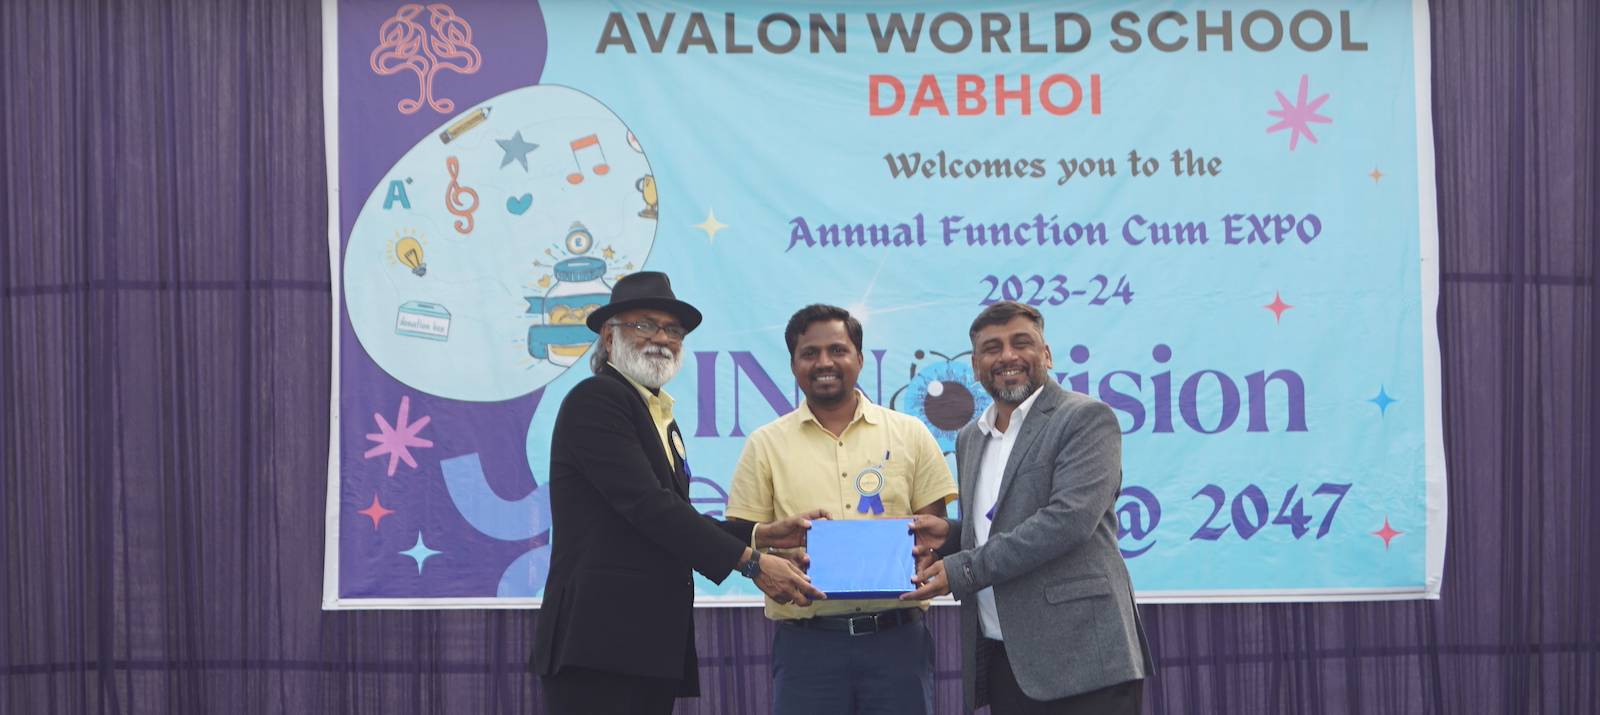 Avalon World School